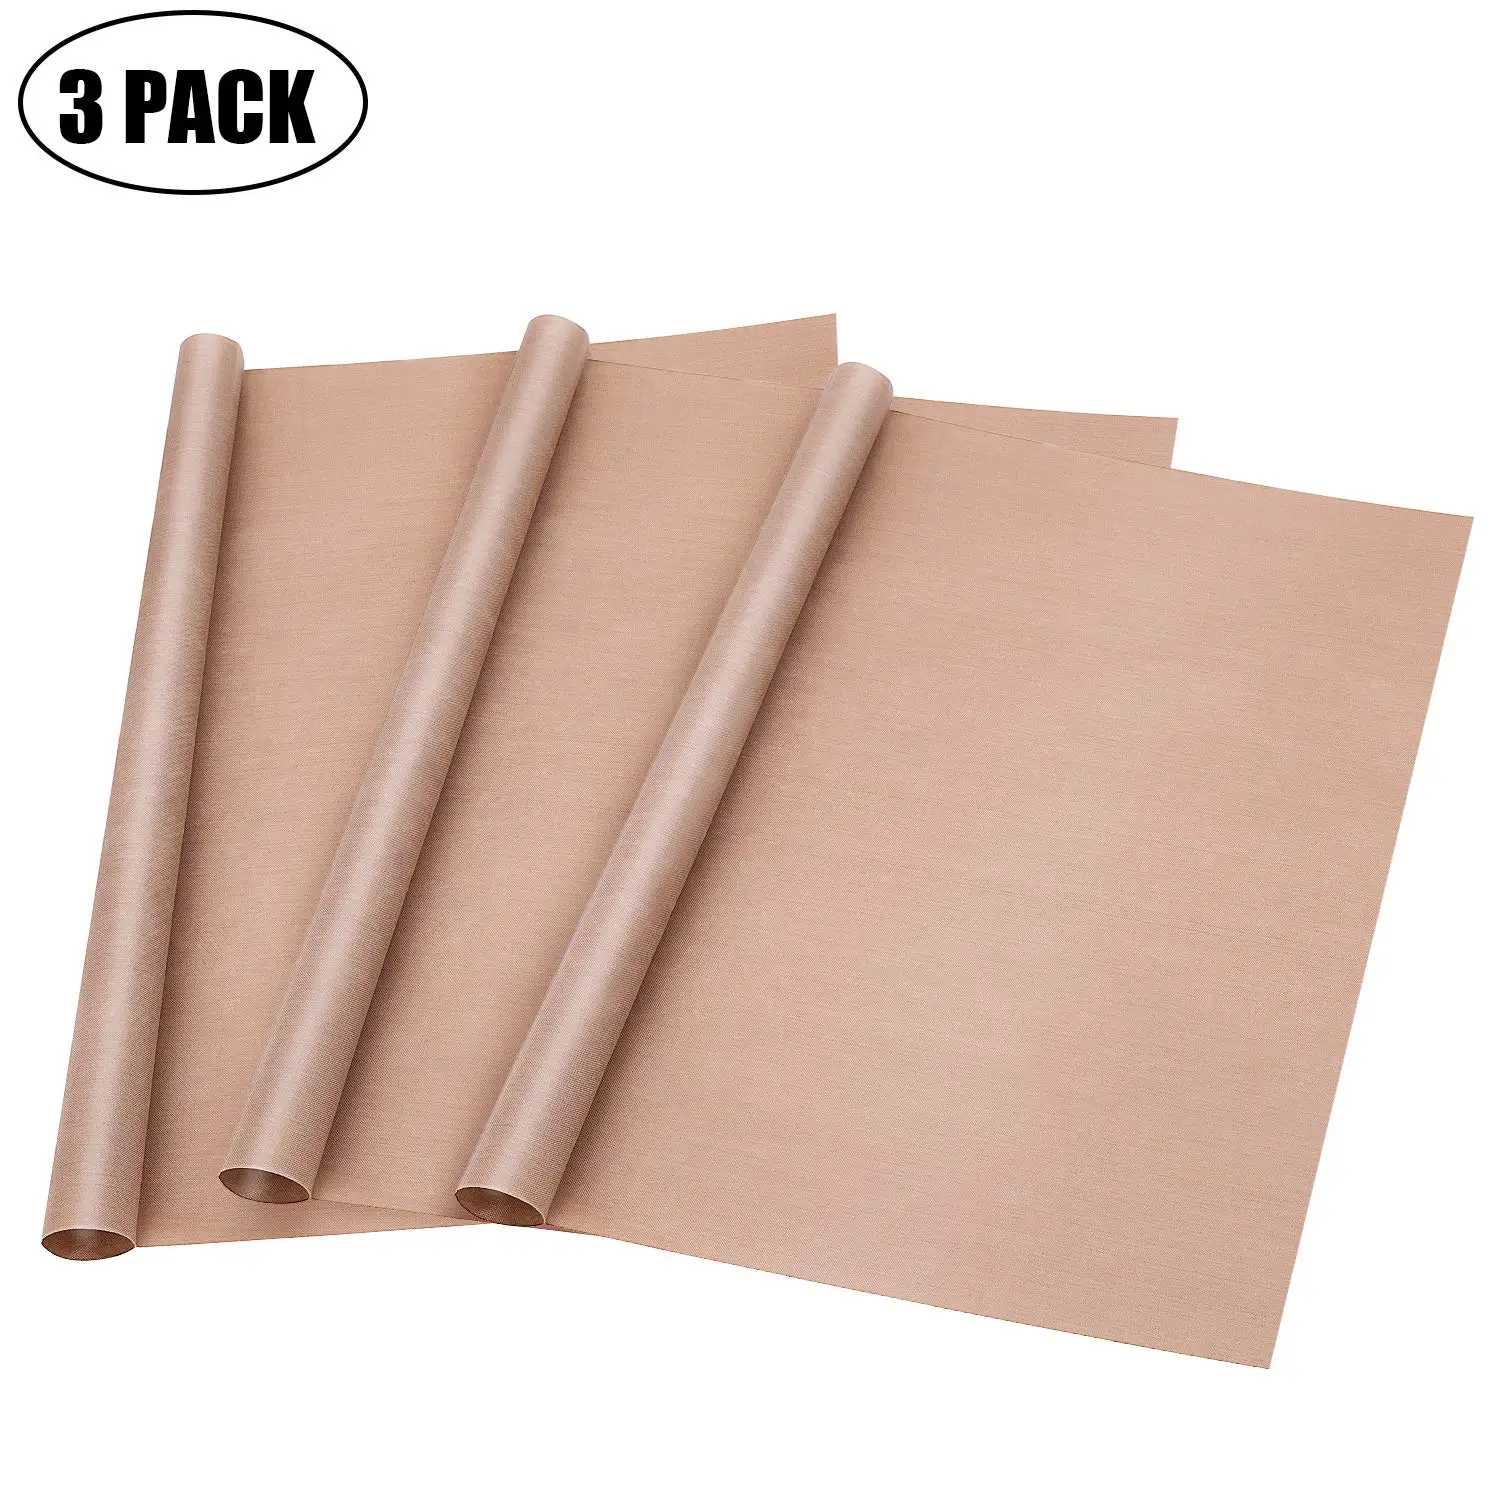 3 Pack Teflon Transfer Sheets for Heat Press Non Stick Reusable Craft Paper Mat 